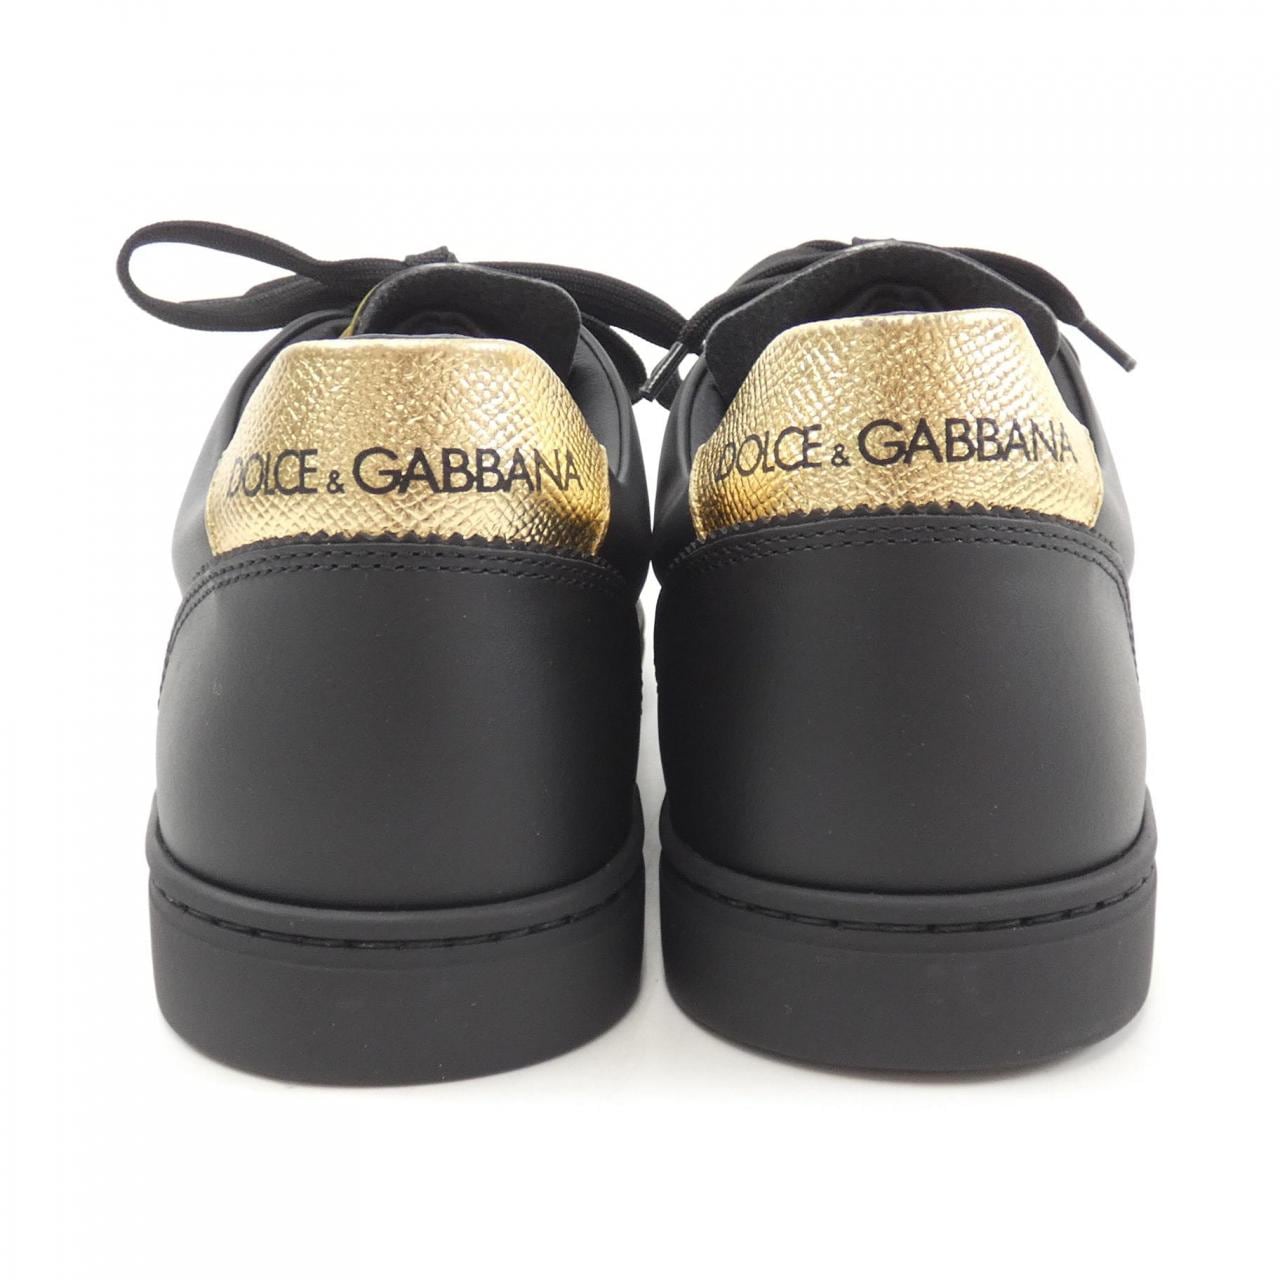 DOLCE&GABBANA杜嘉班納運動鞋